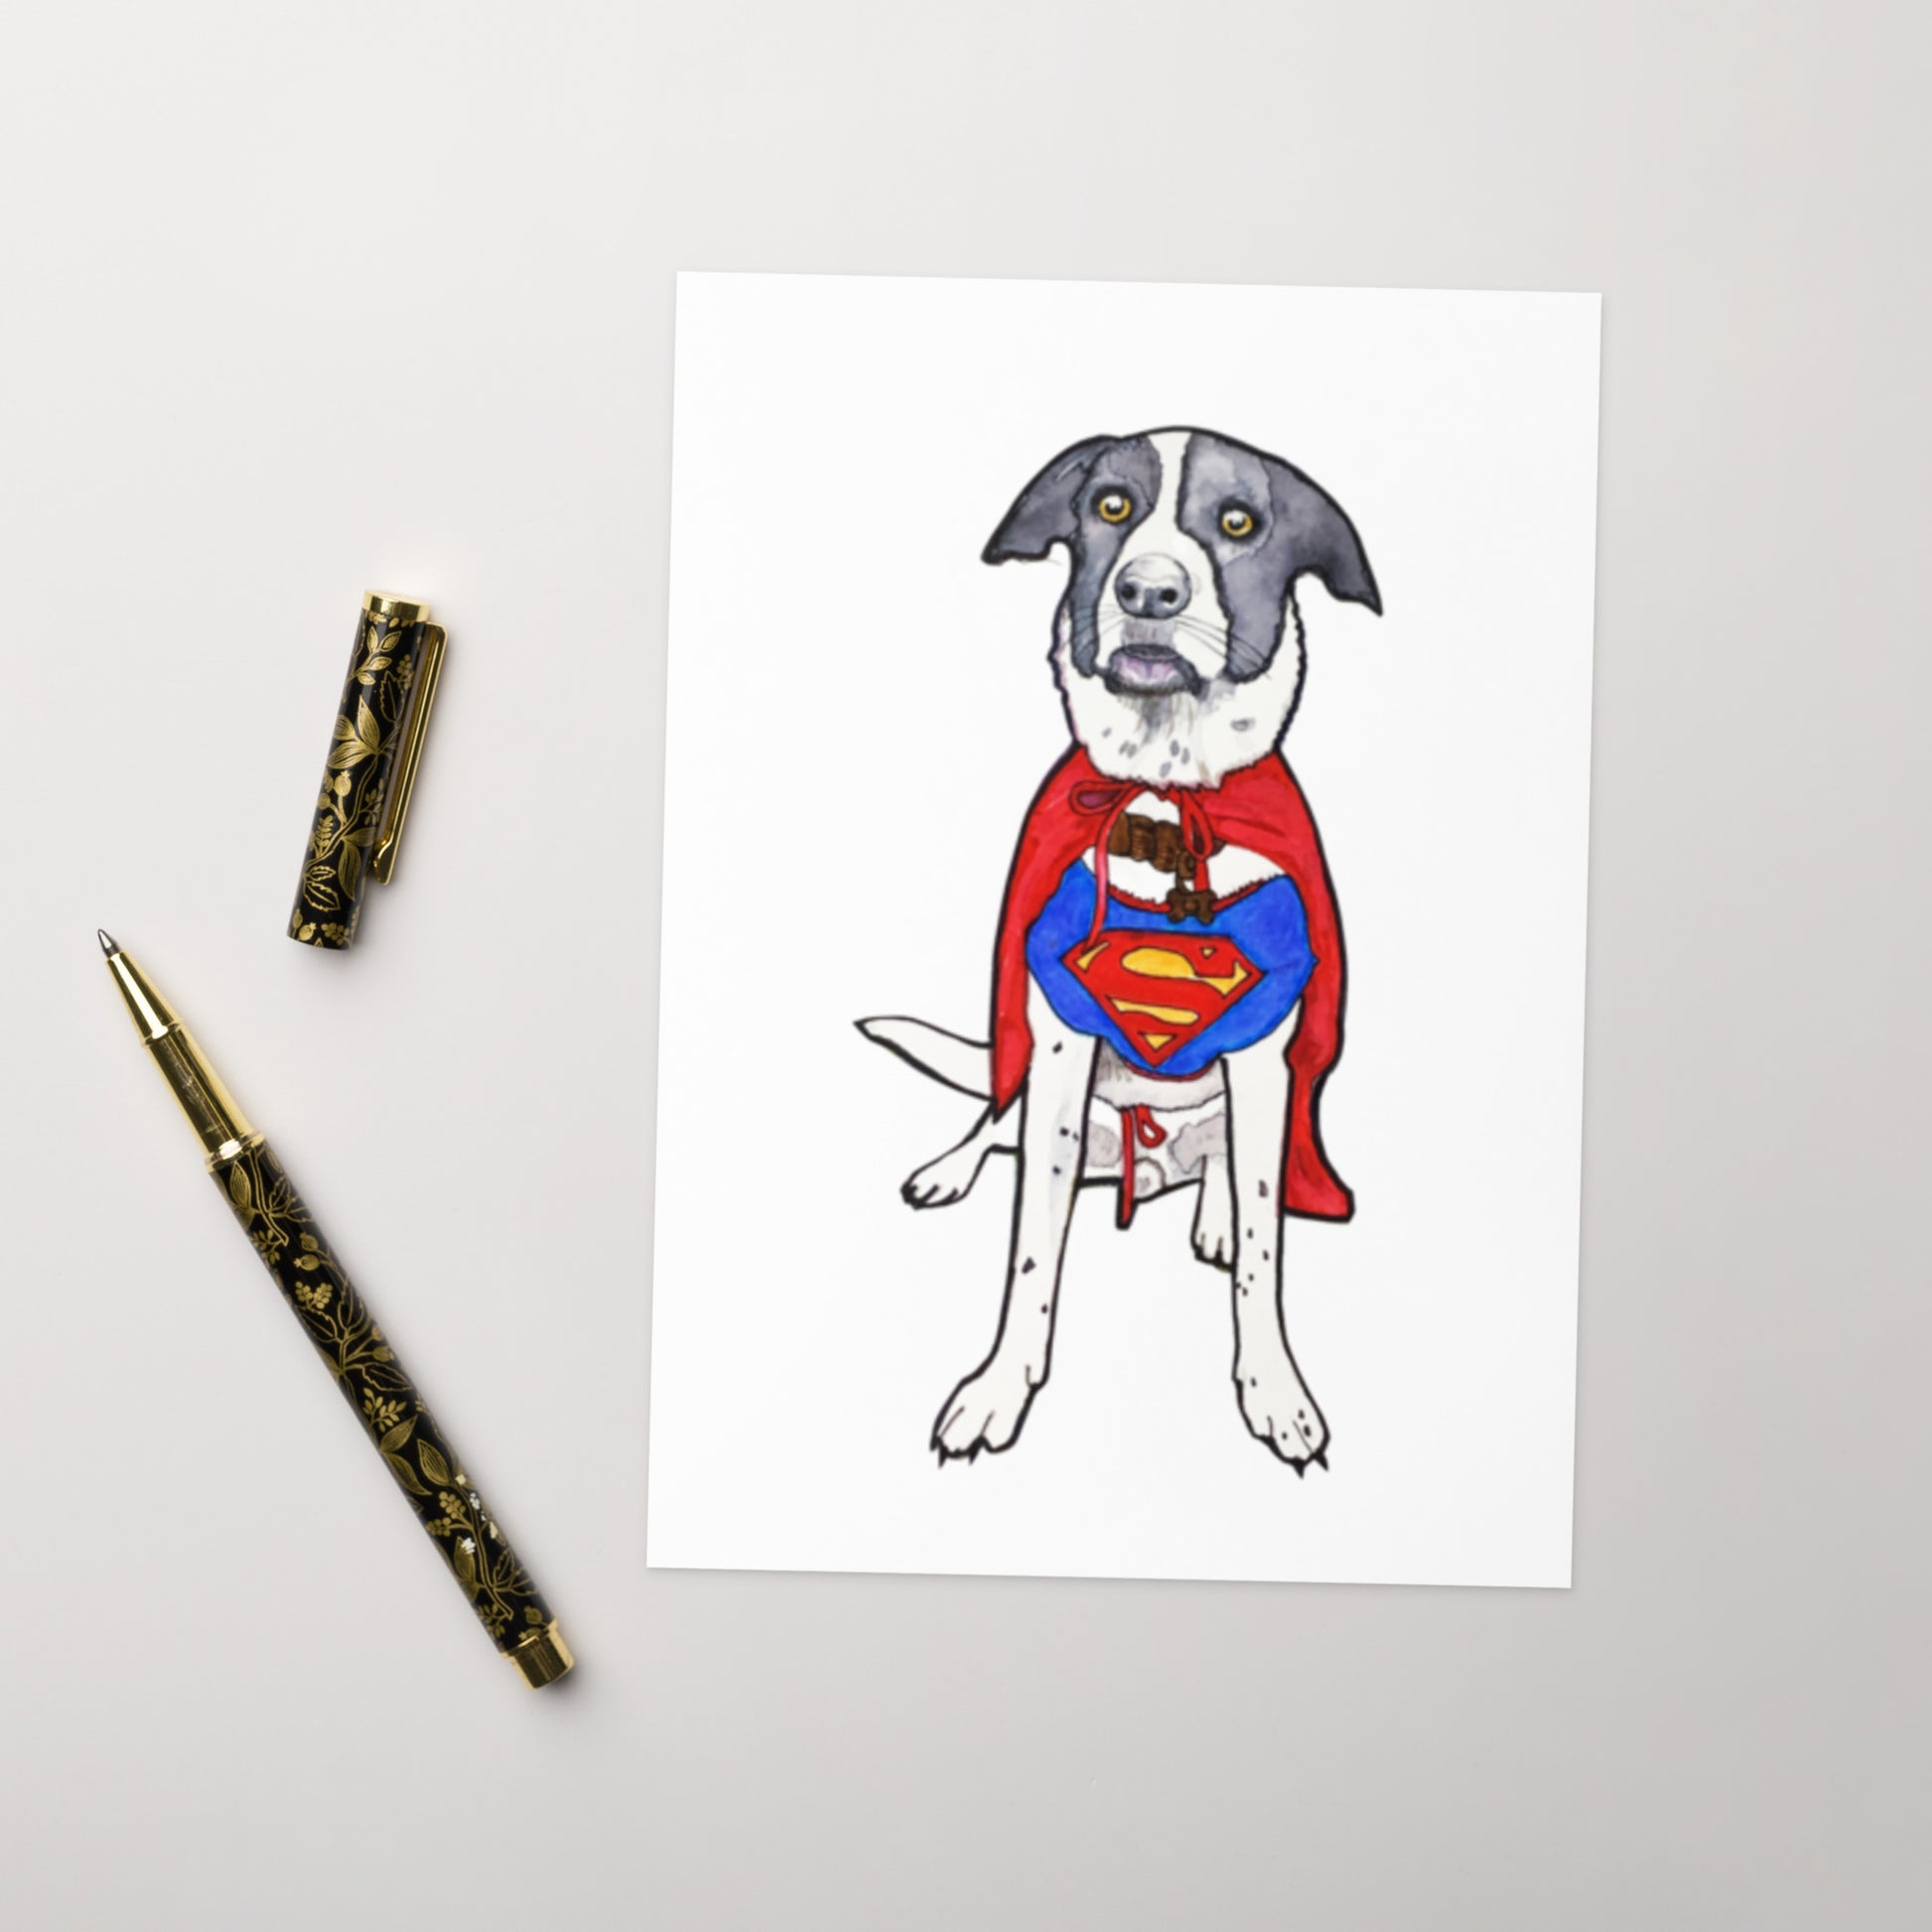 Superman Dog Greeting card - Art Love Decor